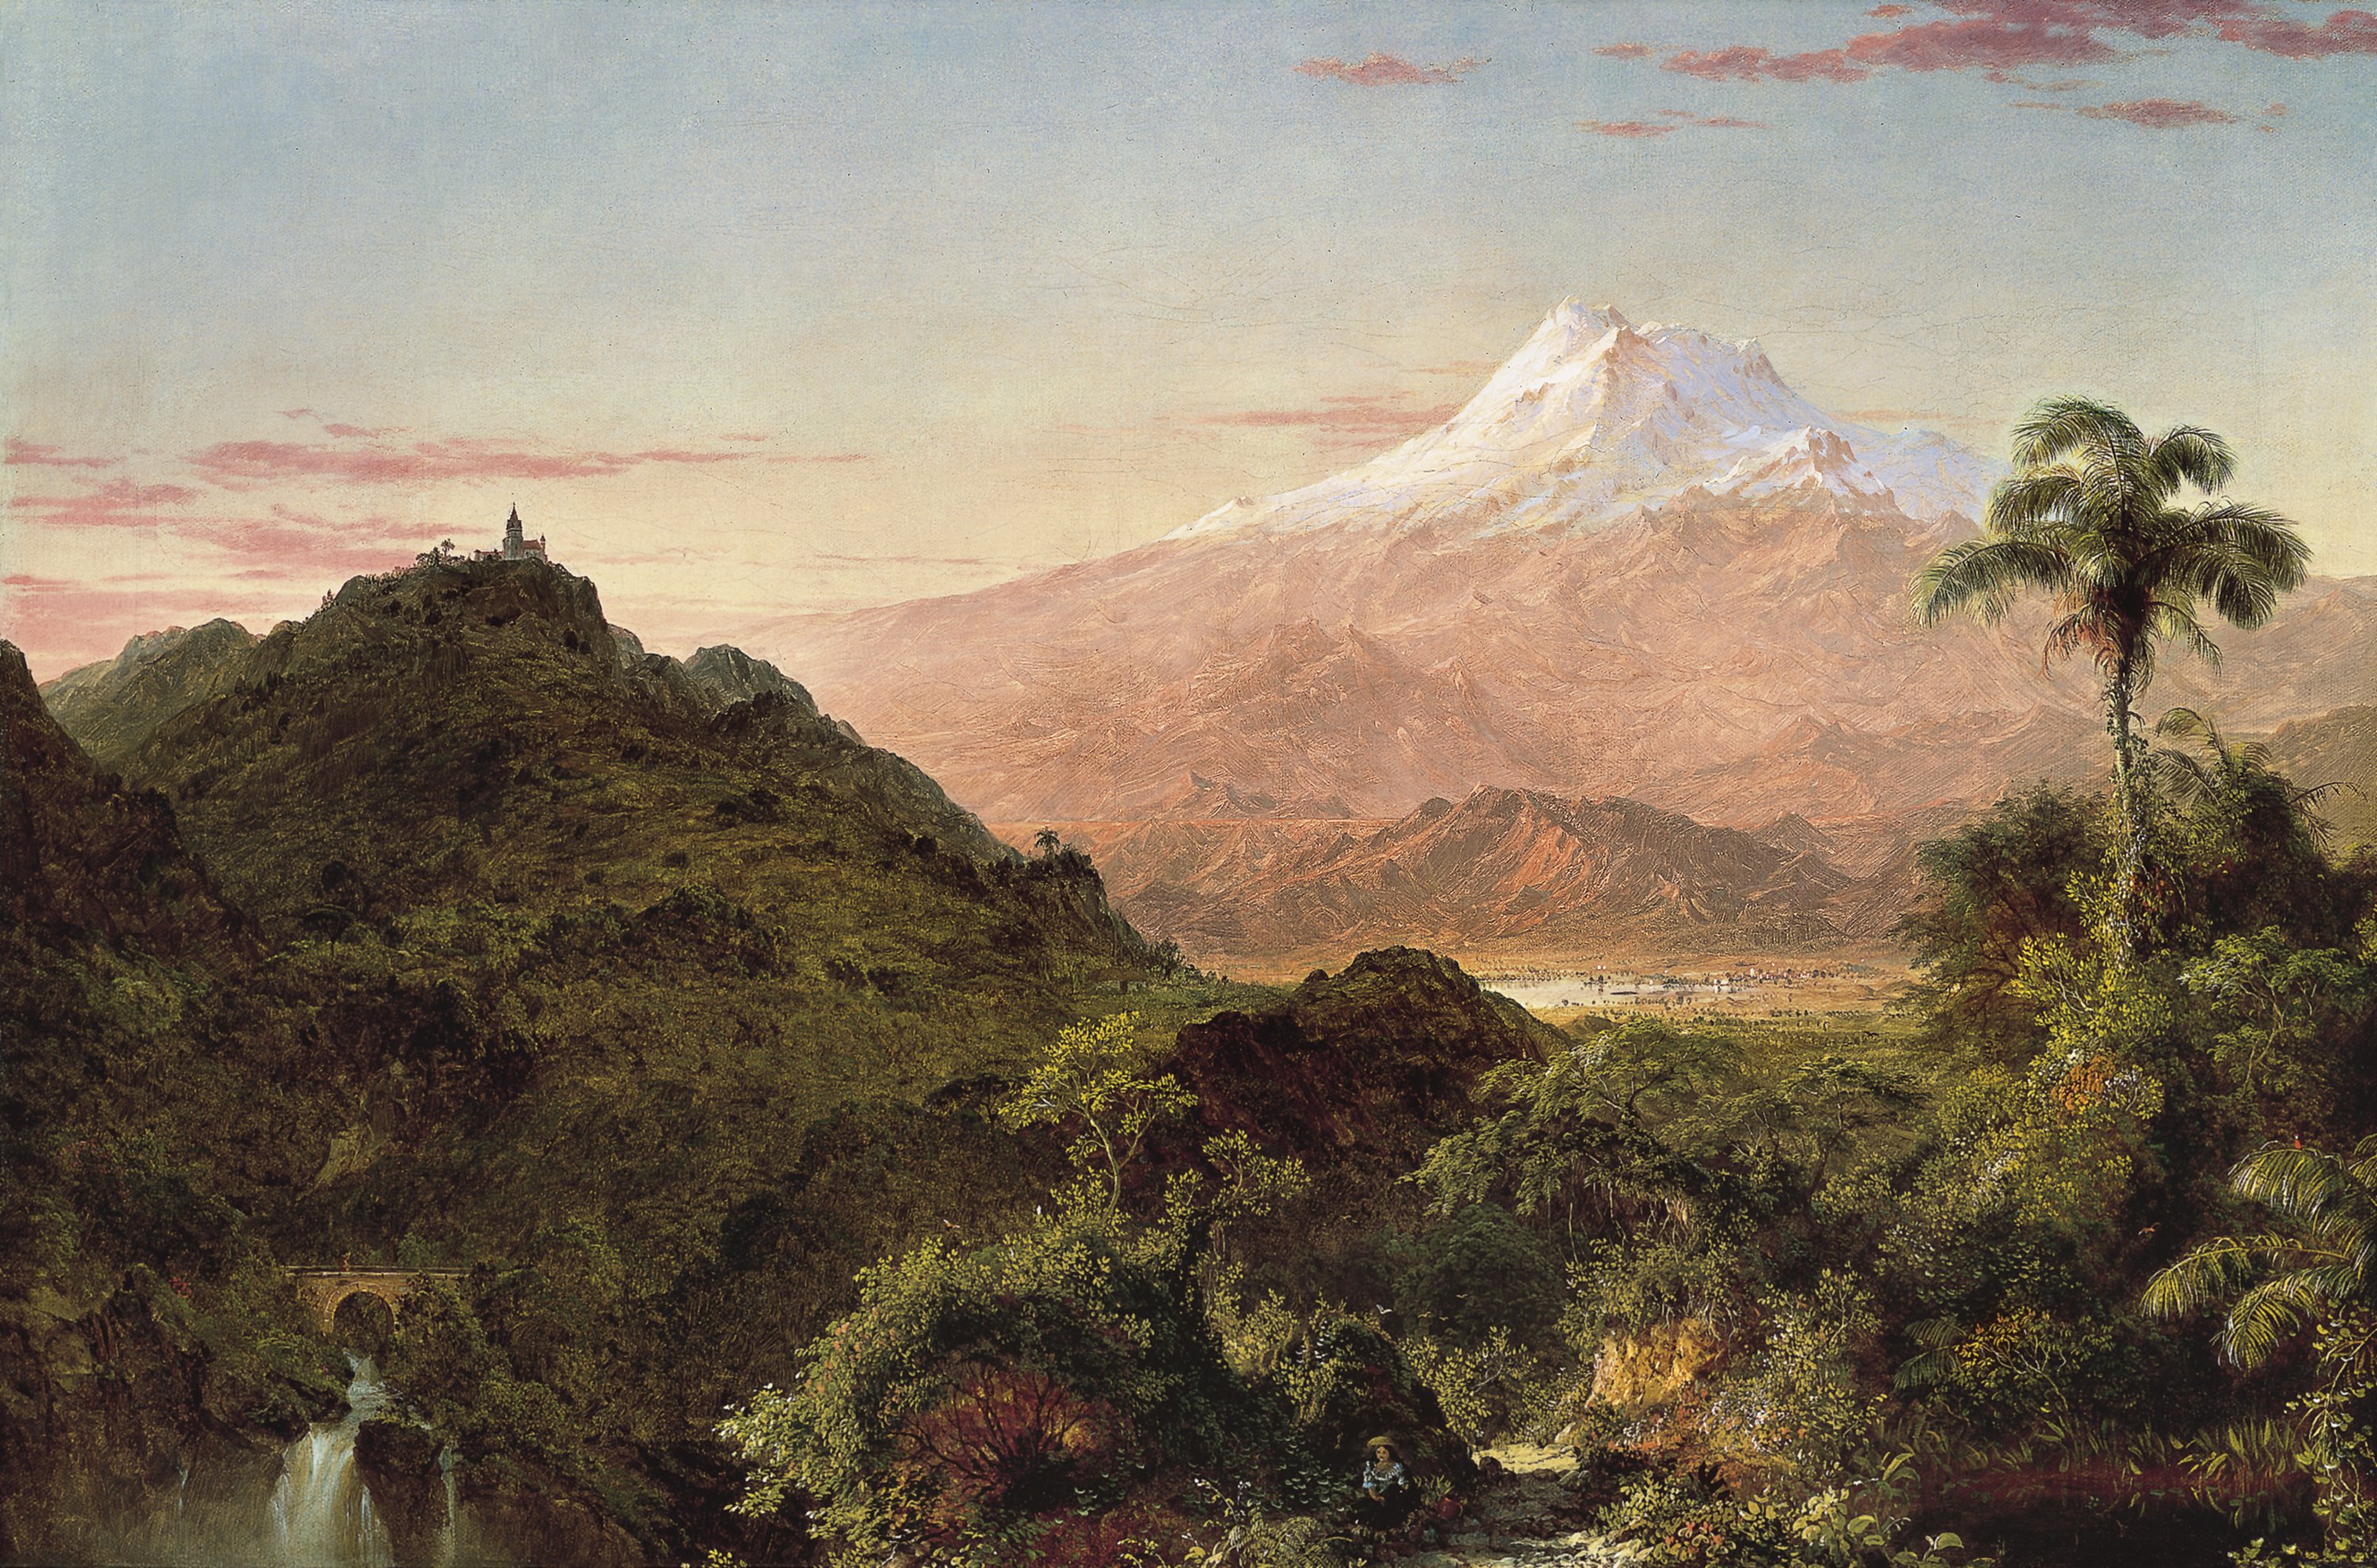 South American Landscape. Paisaje sudamericano, 1856